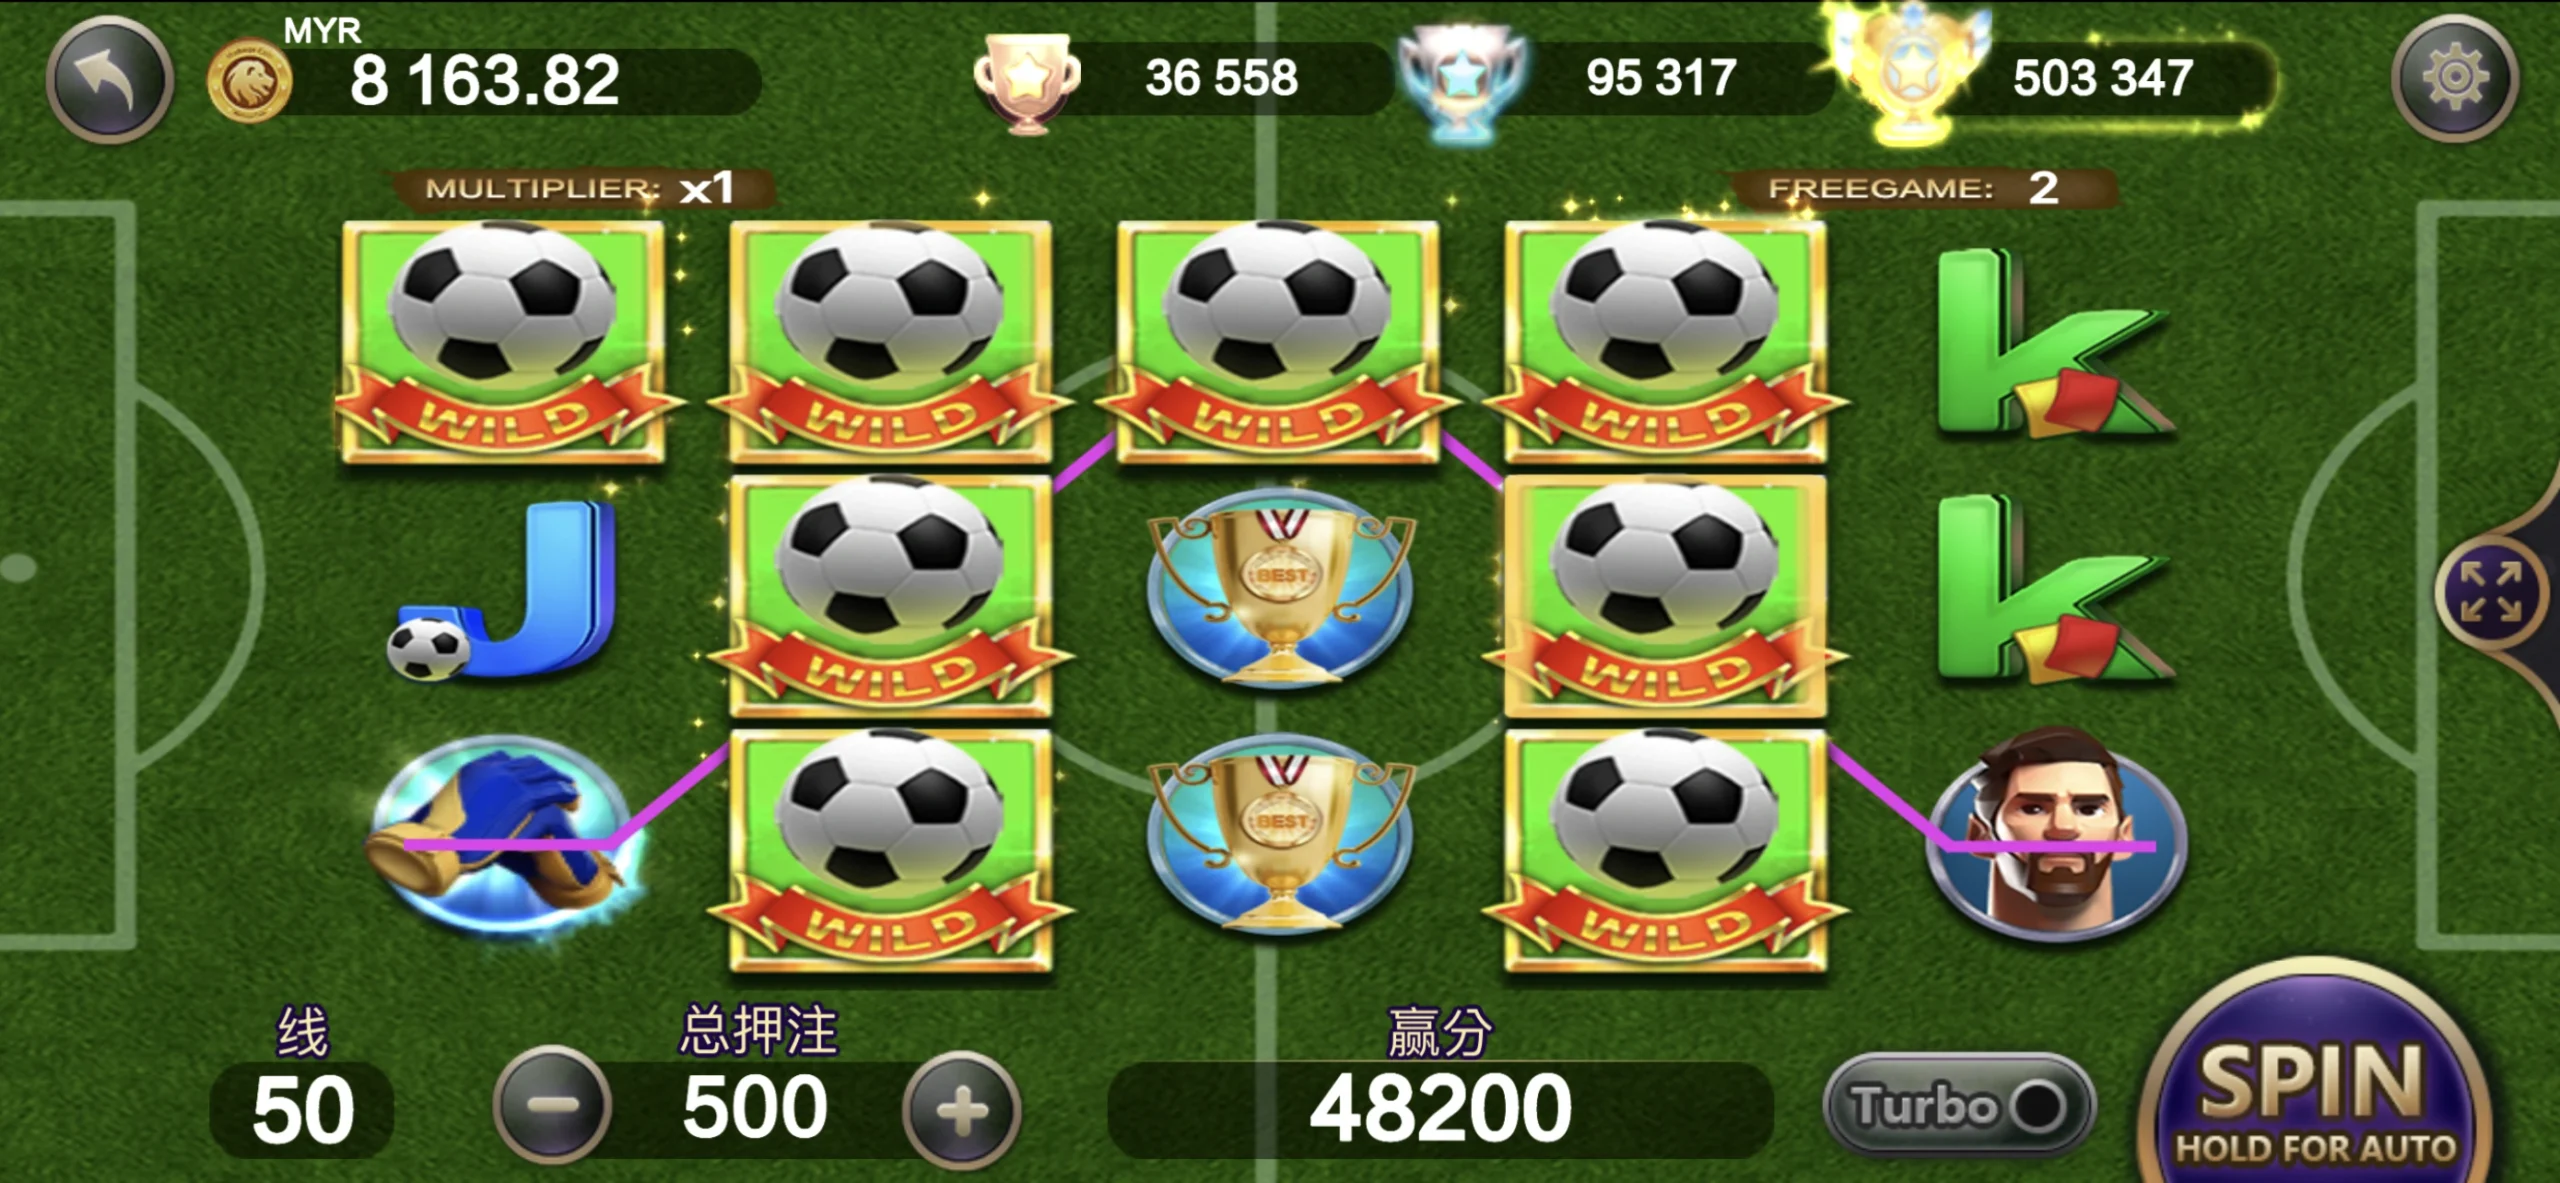 Winbox Lion King Football Free Game